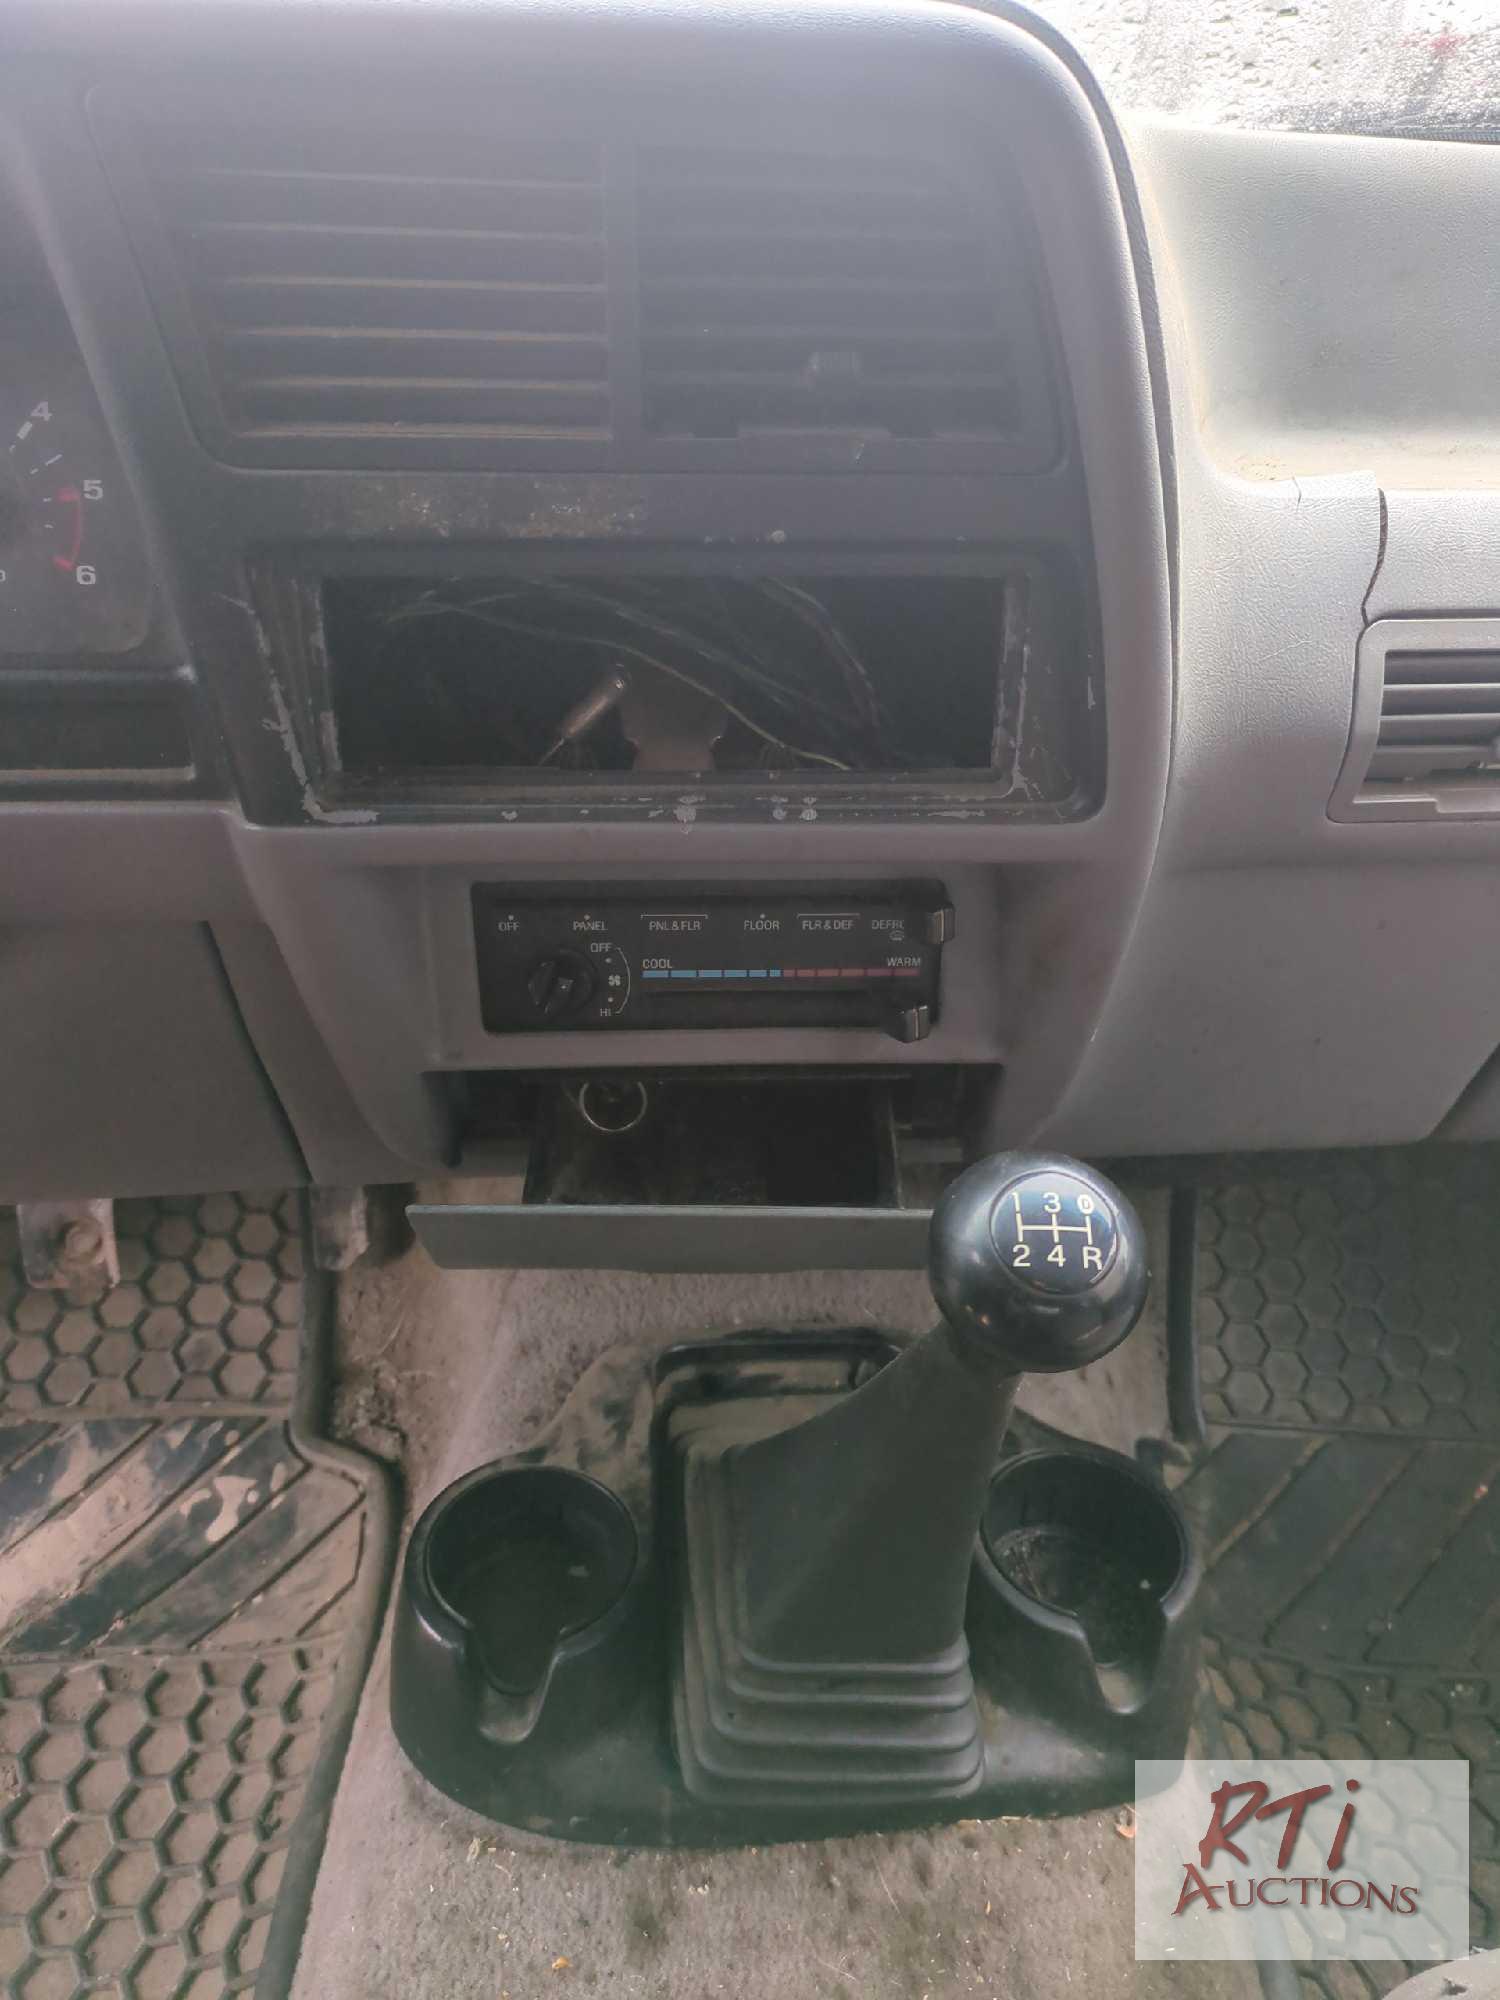 1994 Ford Ranger extended cab pickup, XLT, standard transmission, 211,724 mi. includes additional